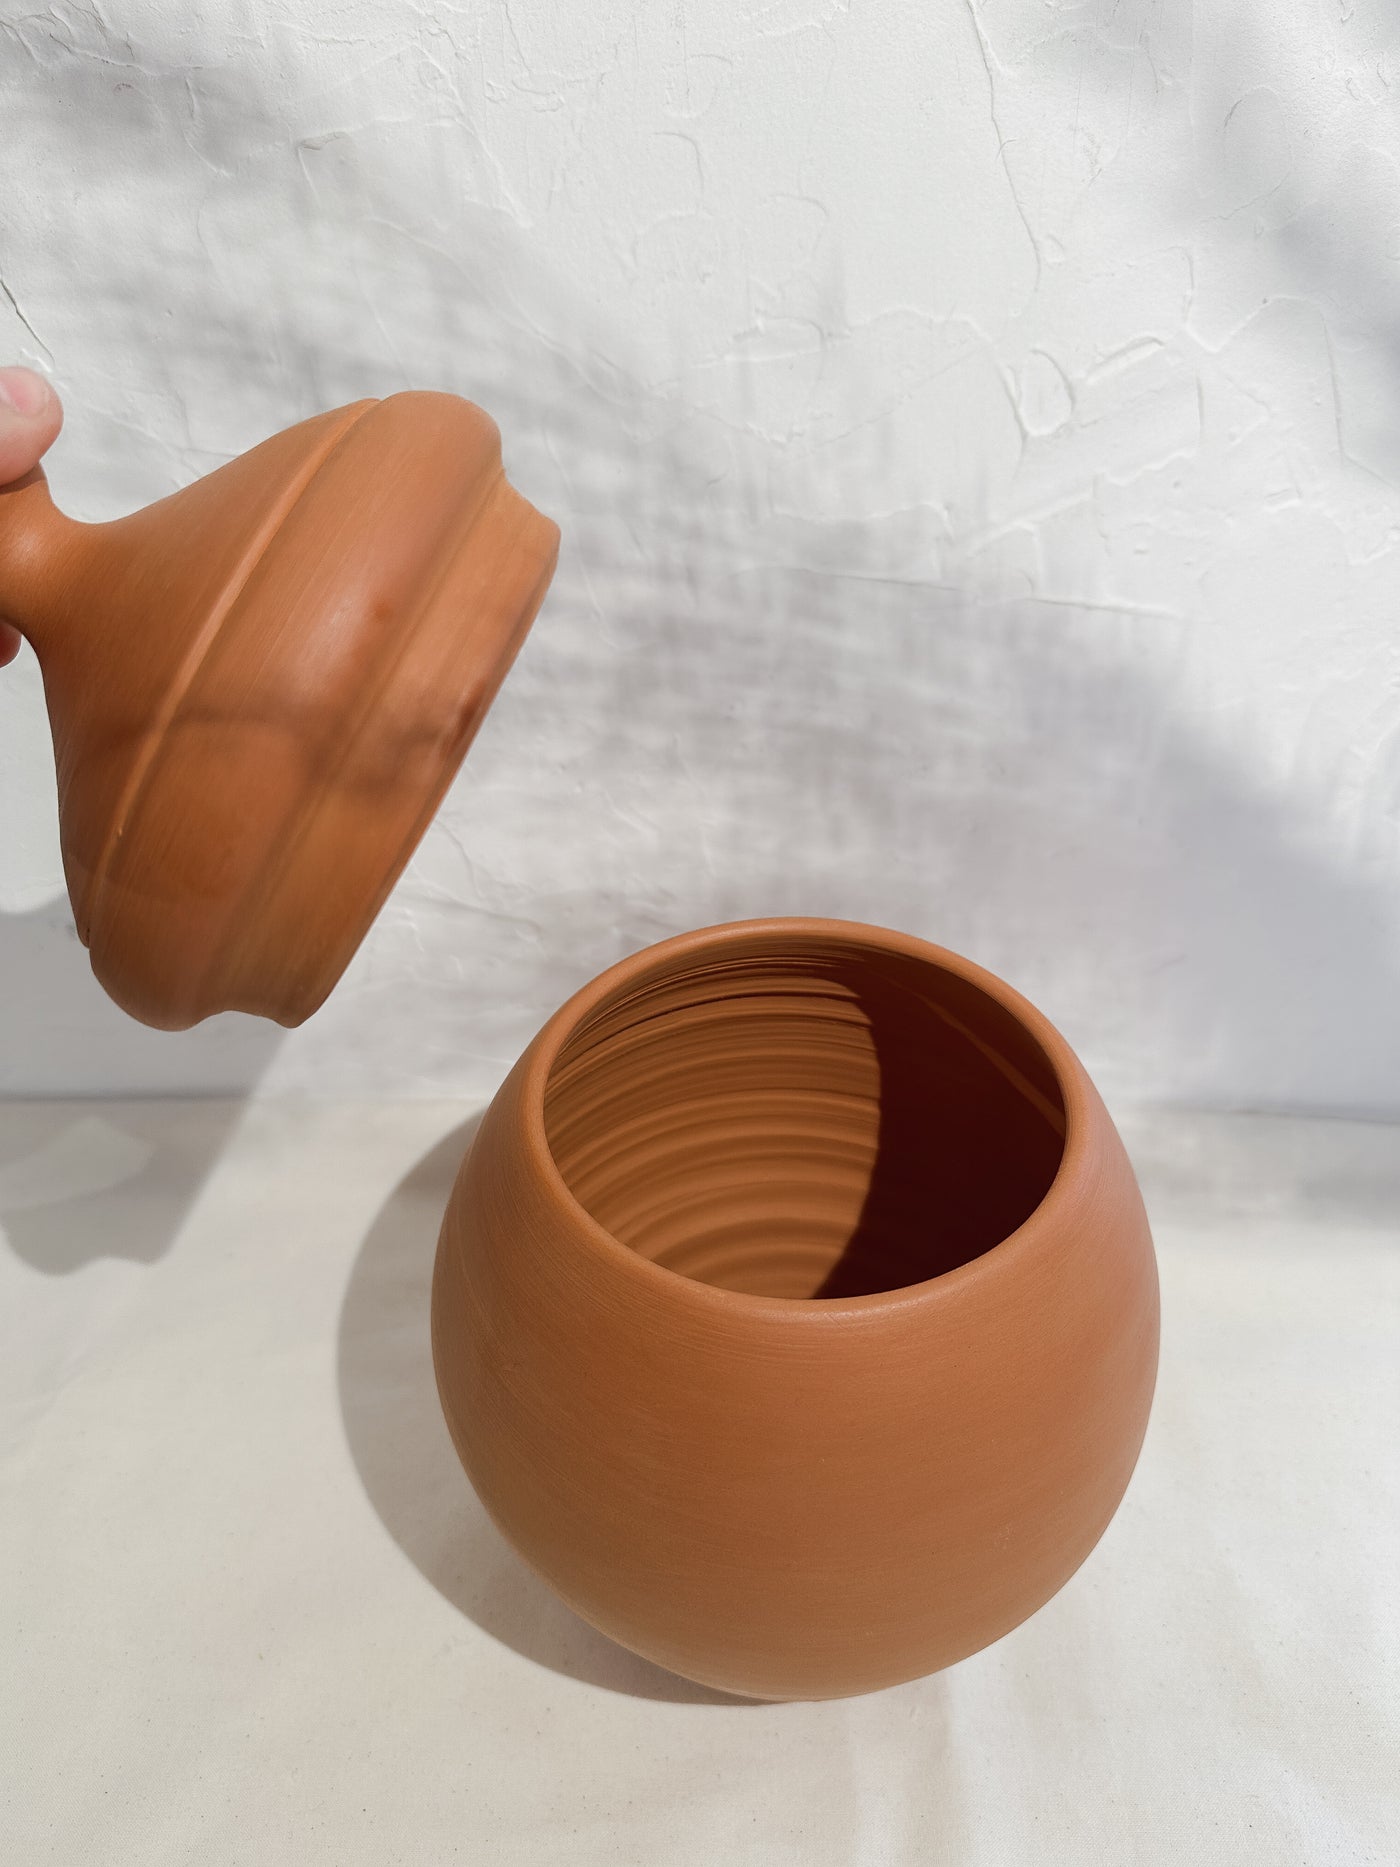 Roca Caus Terracotta Jar with Regular Lid - Simple Good